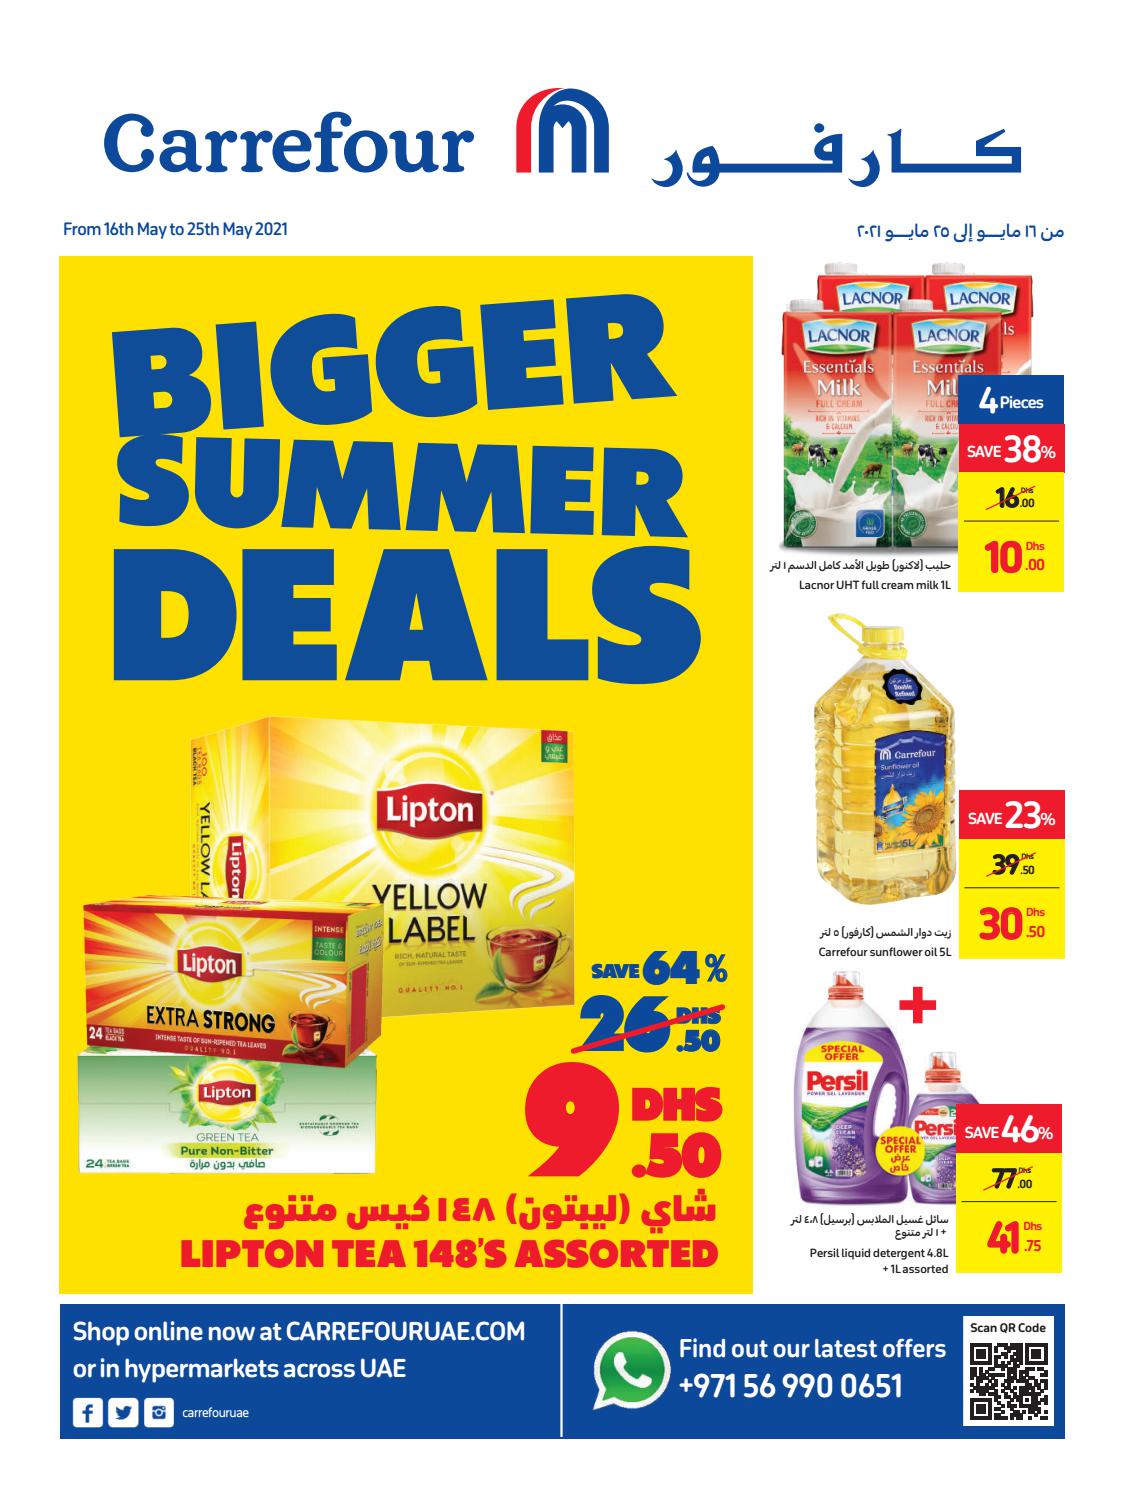 Carrefour-Summer-Deals